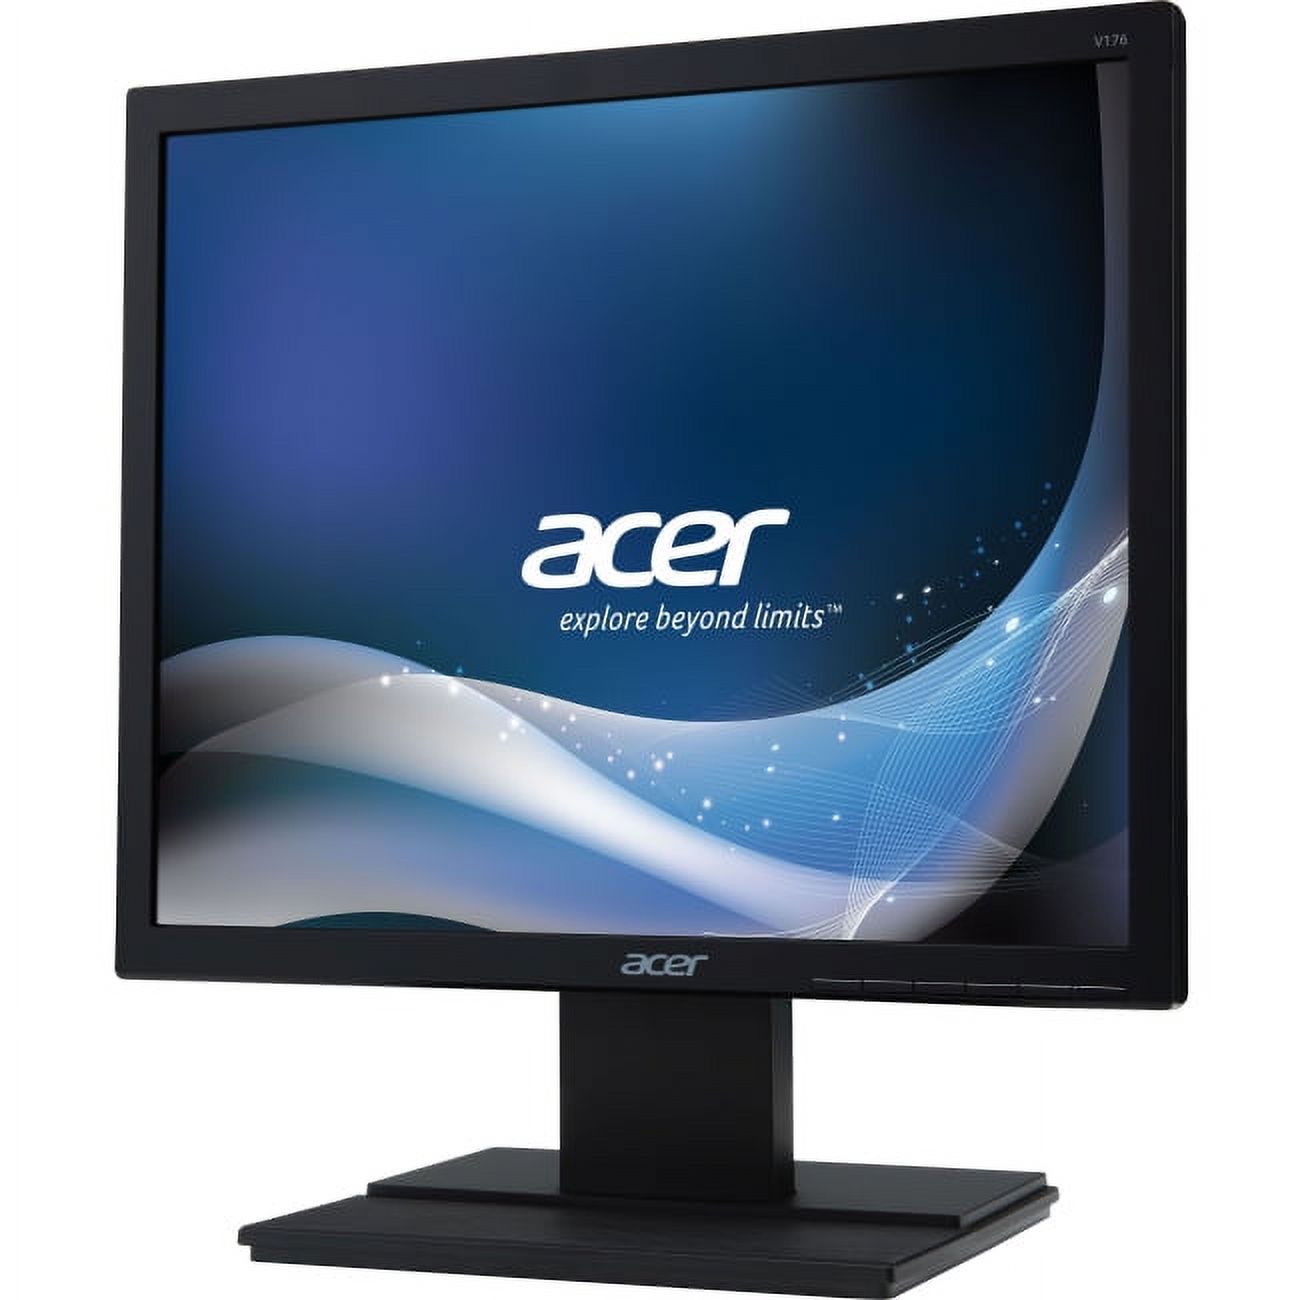 Acer V176L 17" LED LCD Monitor - 5:4 - 5 ms - Adjustable Display Angle - 1280 x 1024 - 16.7 Million Colors - 250 Nit - SXGA - DVI - VGA - 13 W - Black - EPEAT Gold, TCO - image 1 of 2